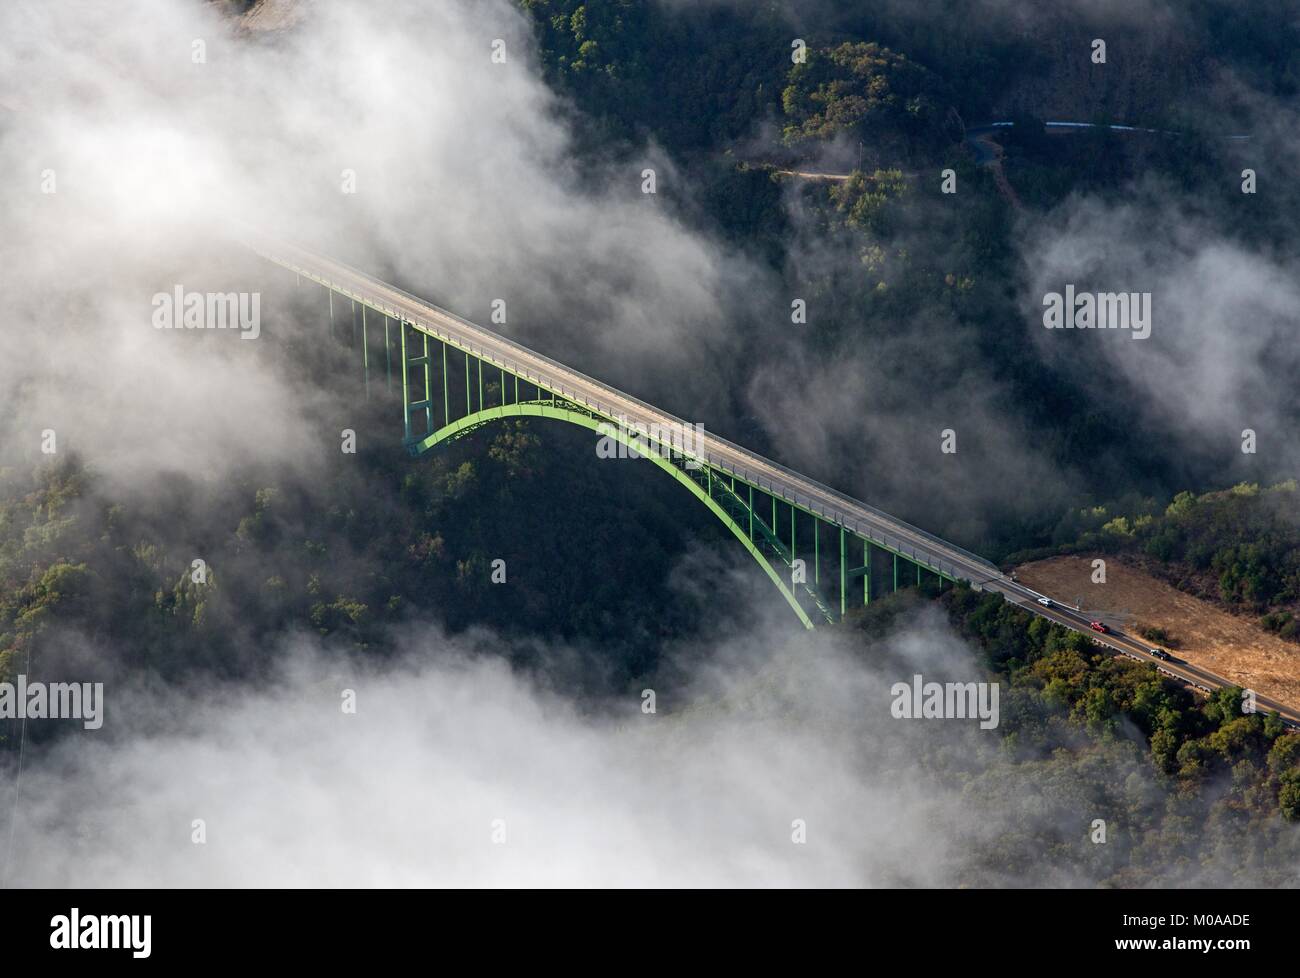 Aerial view of the Big Sur Coastline, California Stock Photo